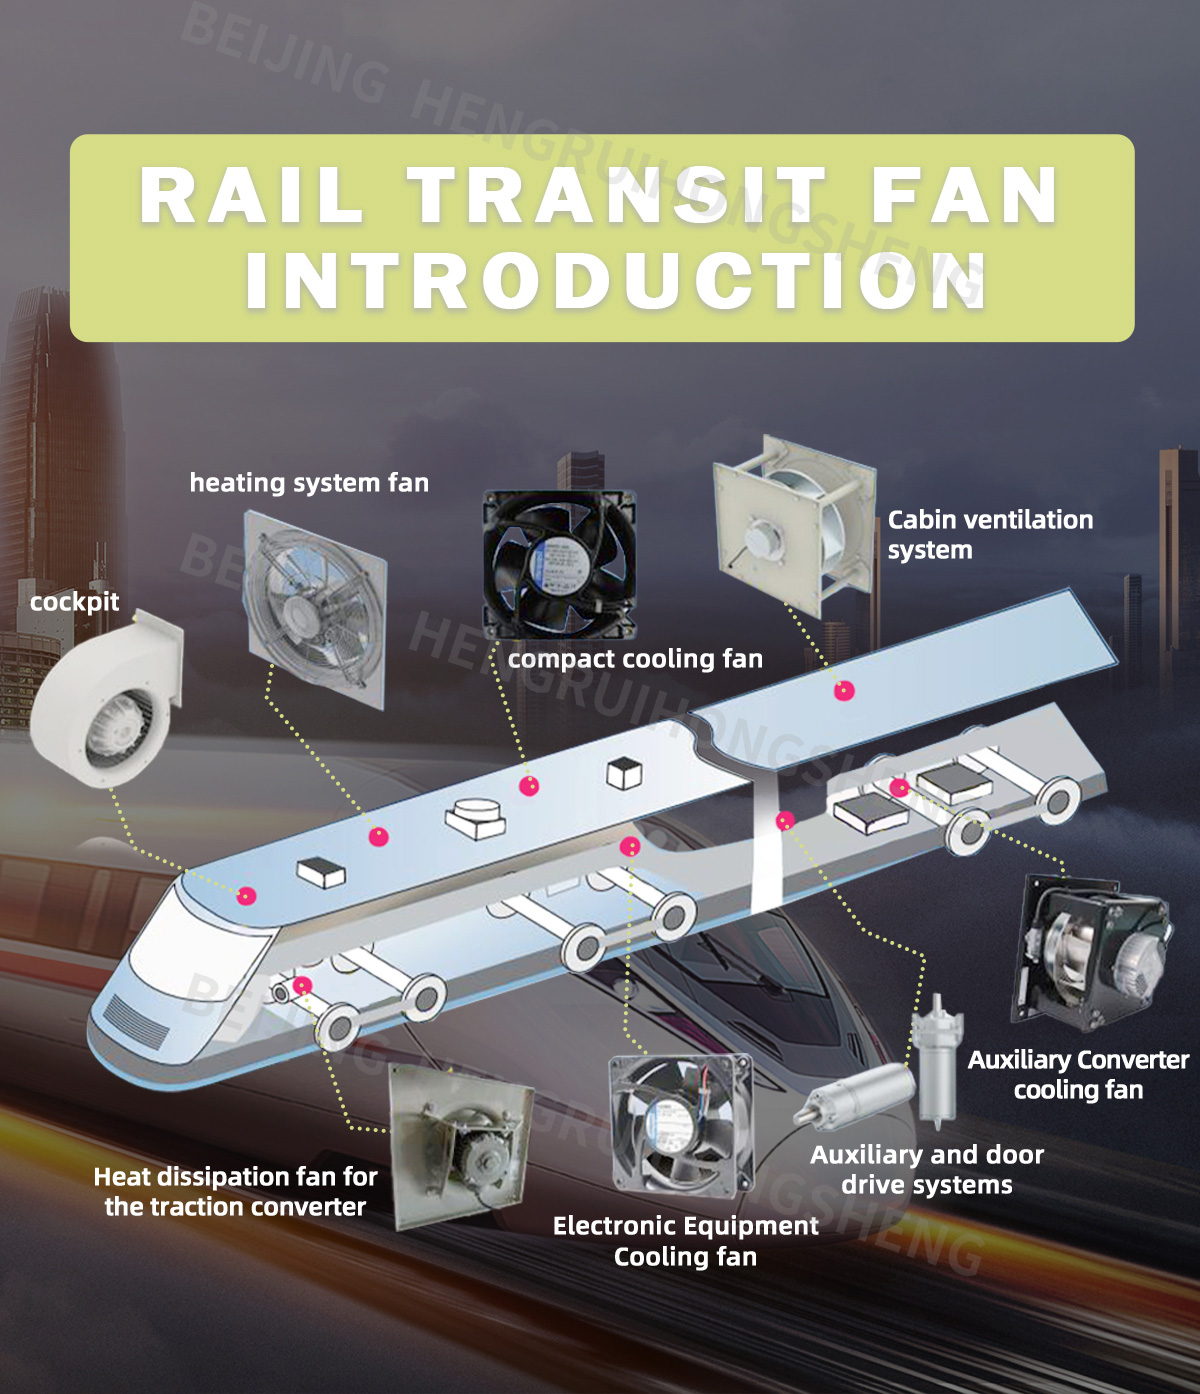 RAIL TRANSIT FAN